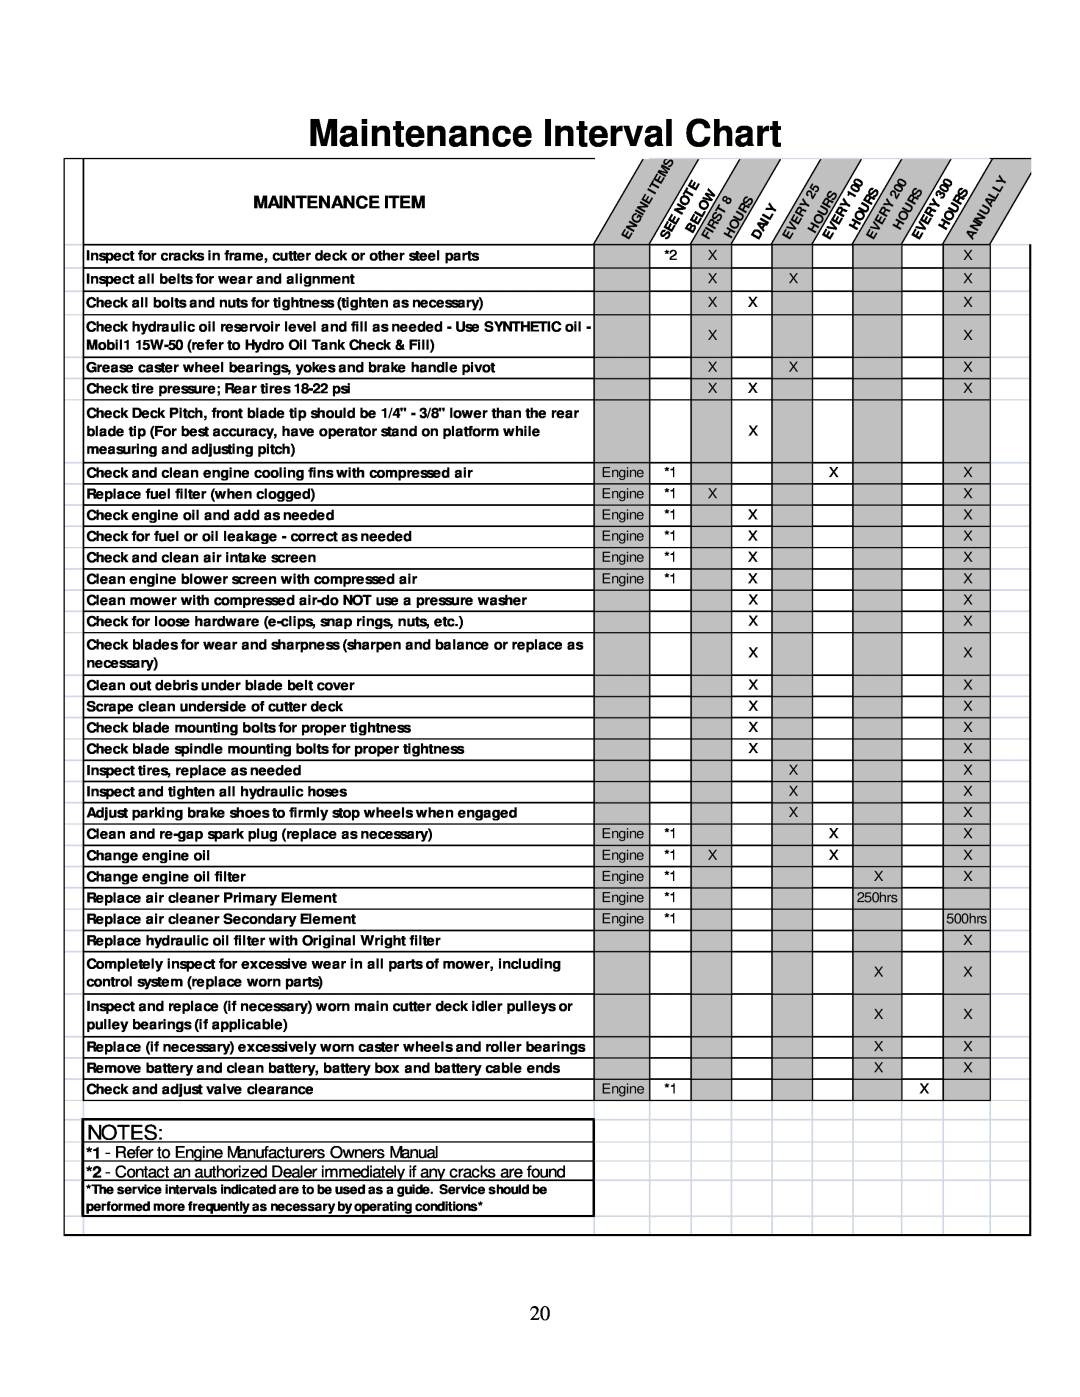 Wright Manufacturing 14SH654 owner manual Maintenance Interval Chart, Maintenance Item 